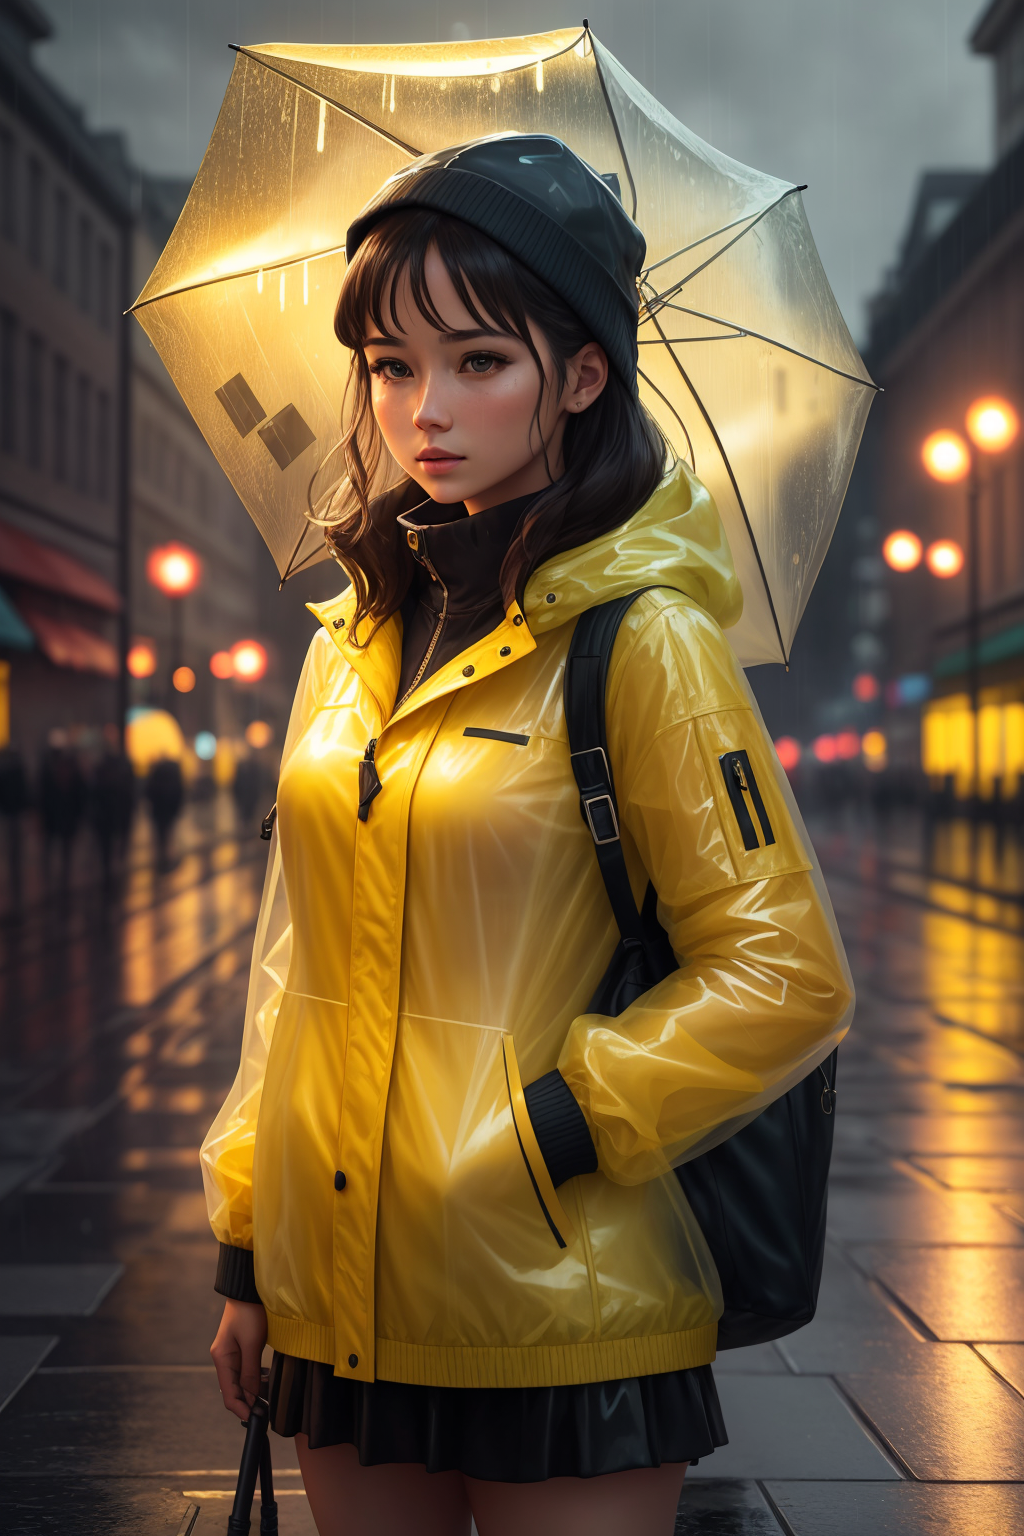 General 1024x1536 yellow AI art water umbrella women outdoors portrait display hat hands in pockets raincoat women Asian street yellow raincoat skirt depth of field city lights backpacks